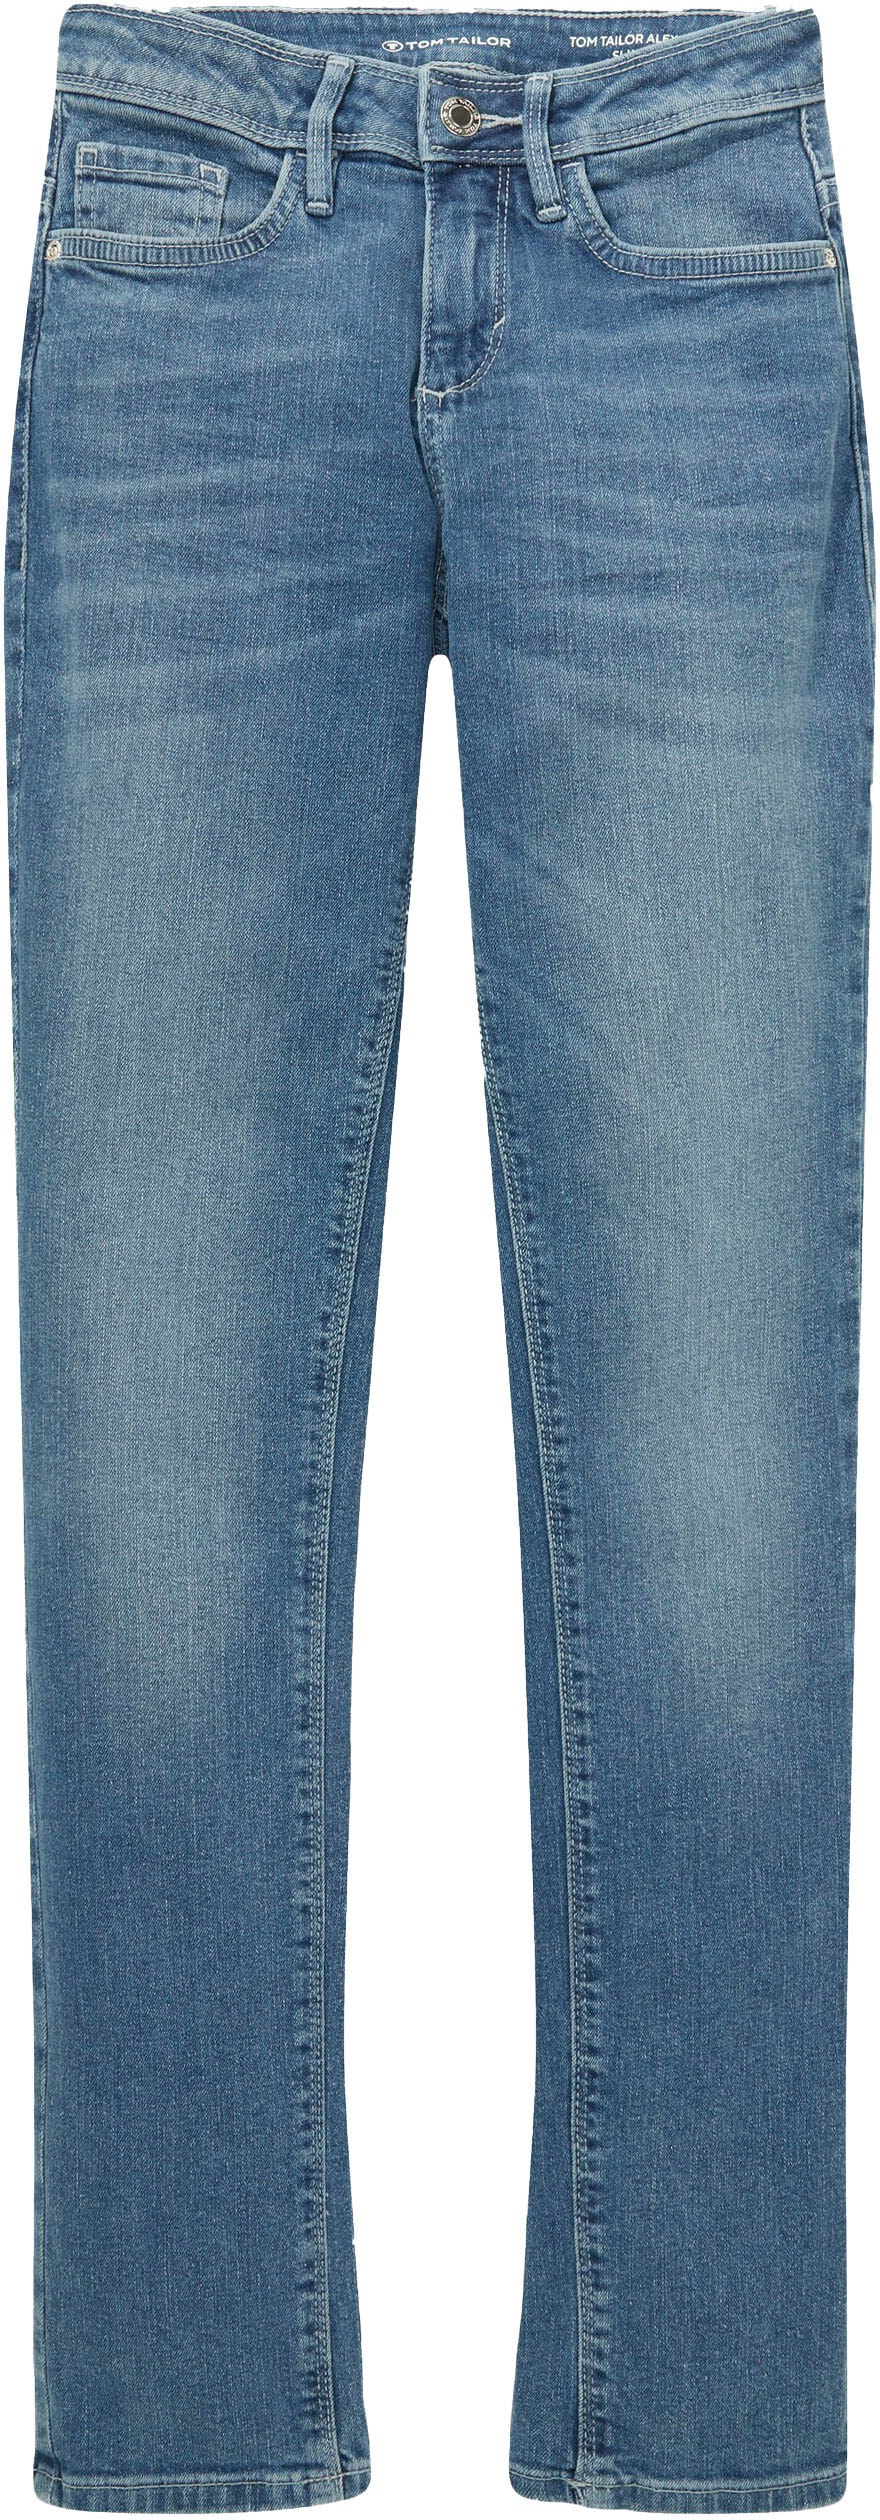 TOM TAILOR Slim-fit-Jeans »Alexa Slim« kaufen | I'm walking